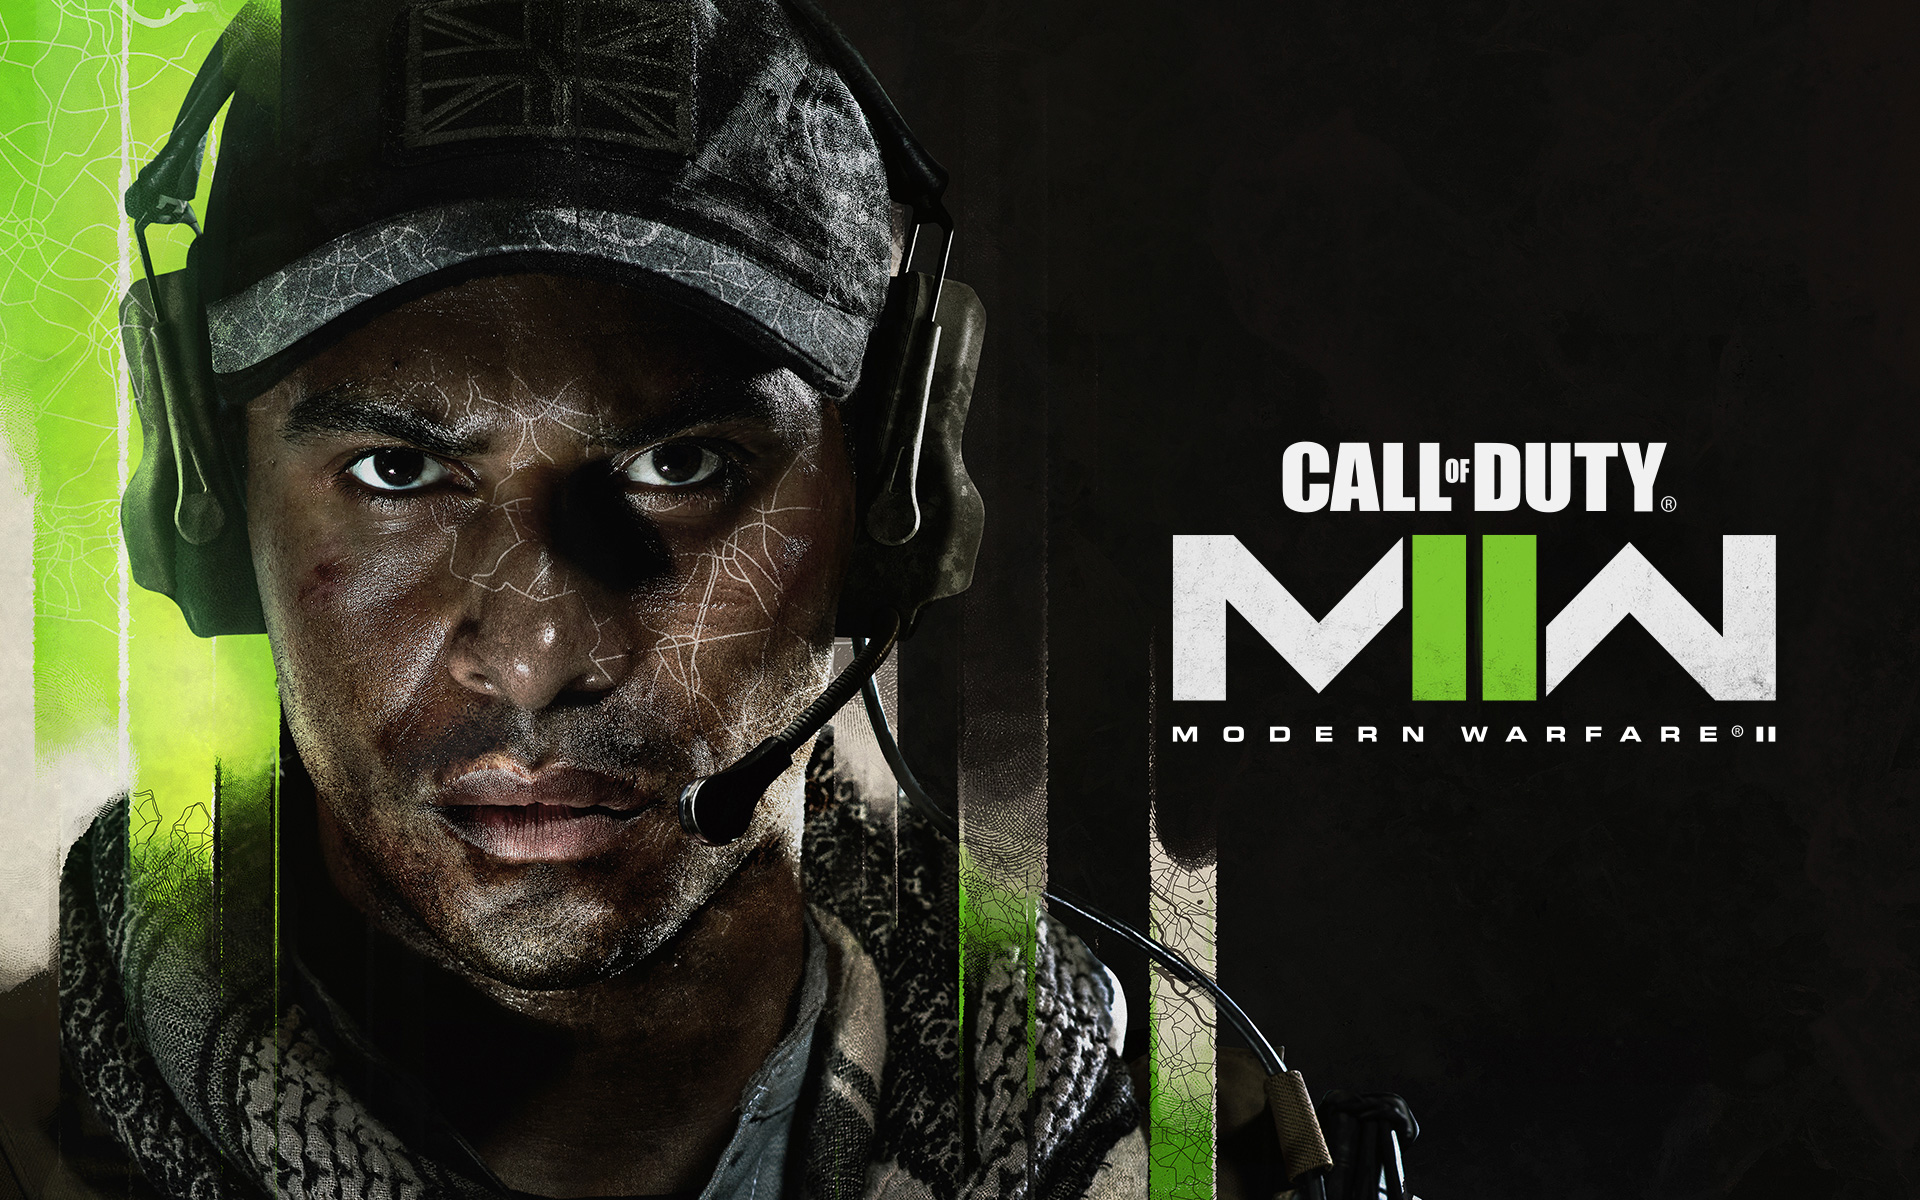 'Call of Duty: Modern Warfare II' will arrive on October 28th